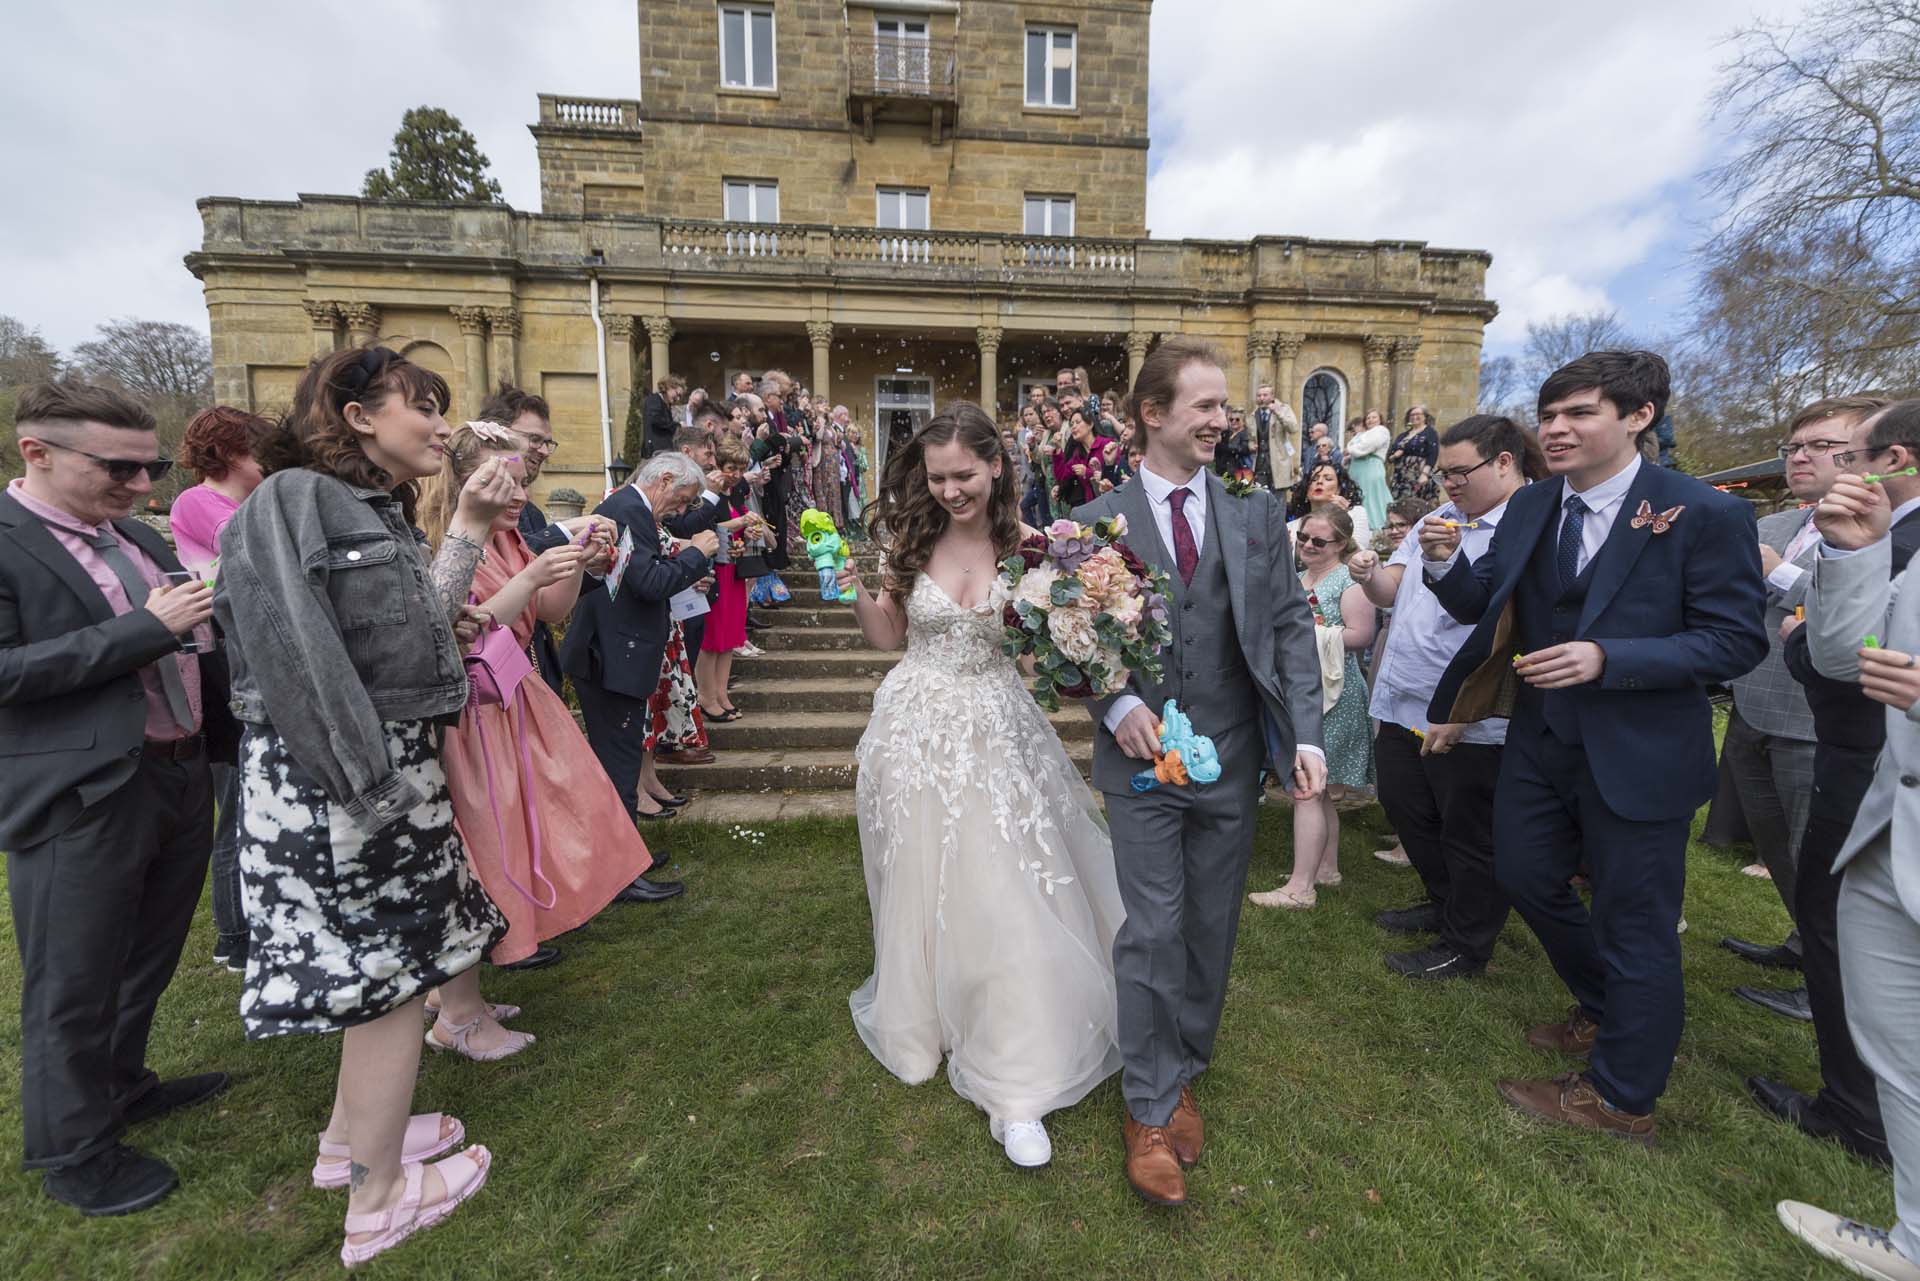 Tunbridge wells wedding salomons estate kent wedding photographer article on extreme wide angle lenses